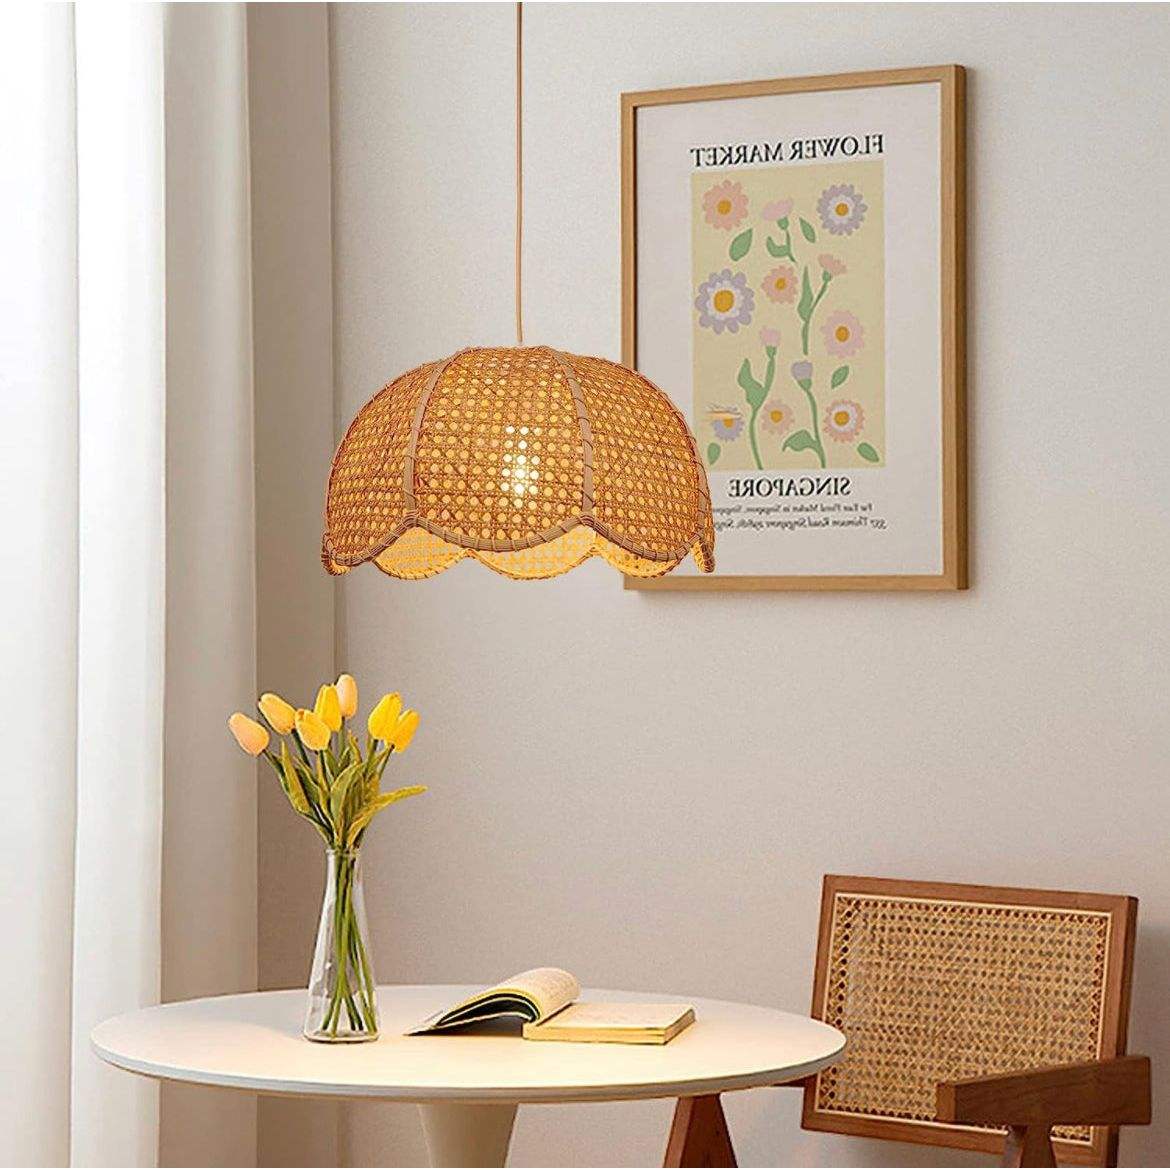 Arturesthome Indoor Hanging Ceiling Light Fixture, Hand Woven Vintage Lotus Flower Pendant Lamp Chandelier for Kitchen Living Room Bedroom Crafts Lampshade - Selzalot